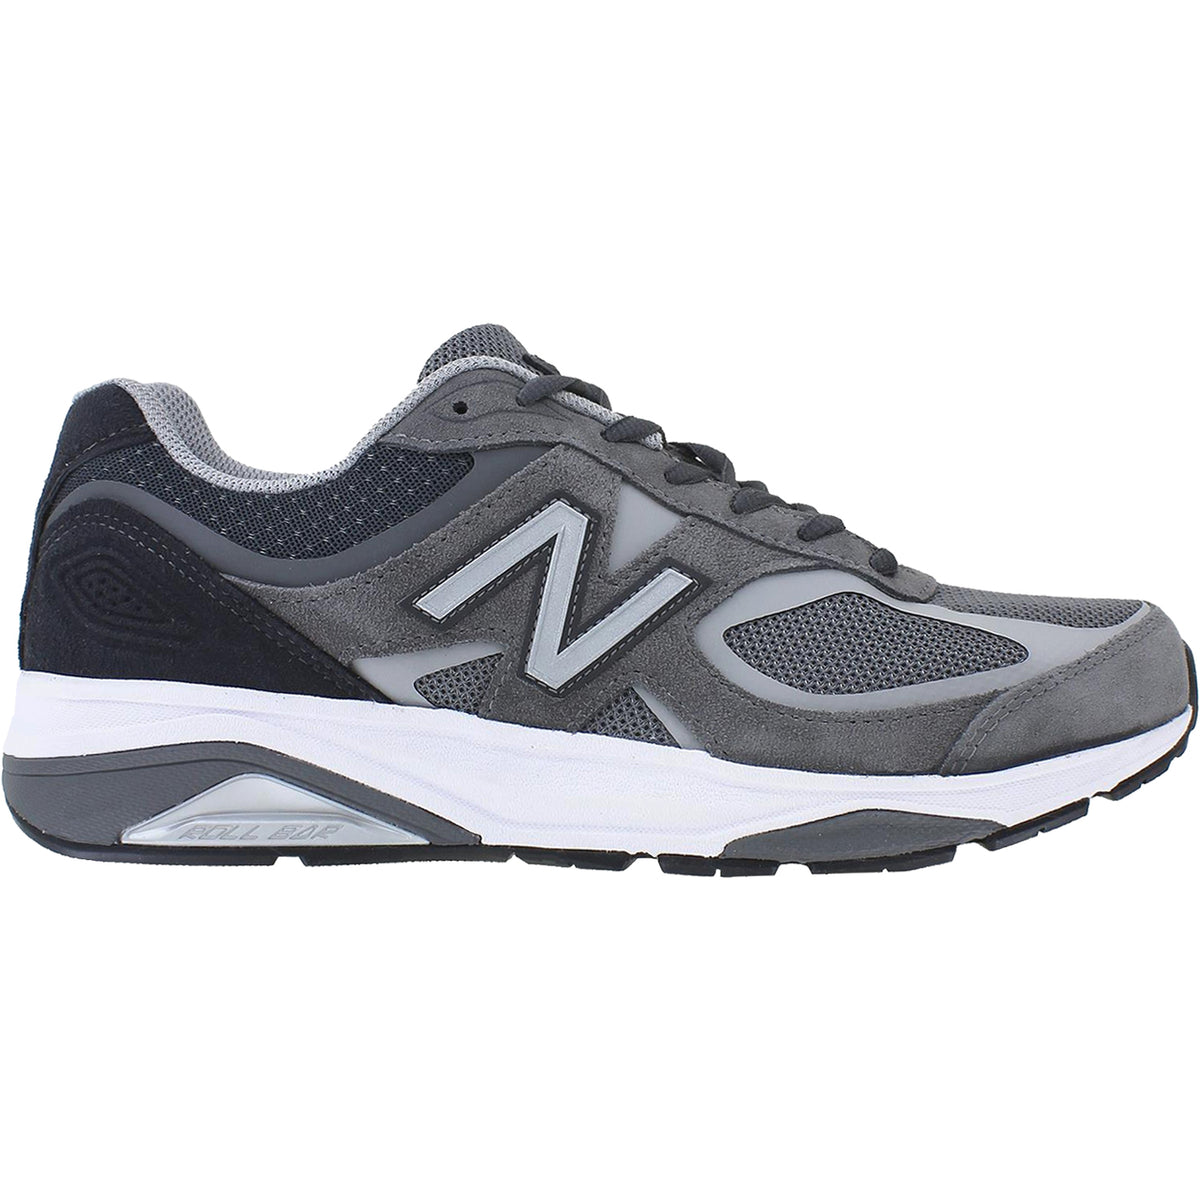 New Balance M1540v3 Grey | Men's Running Shoes | Footwear etc.